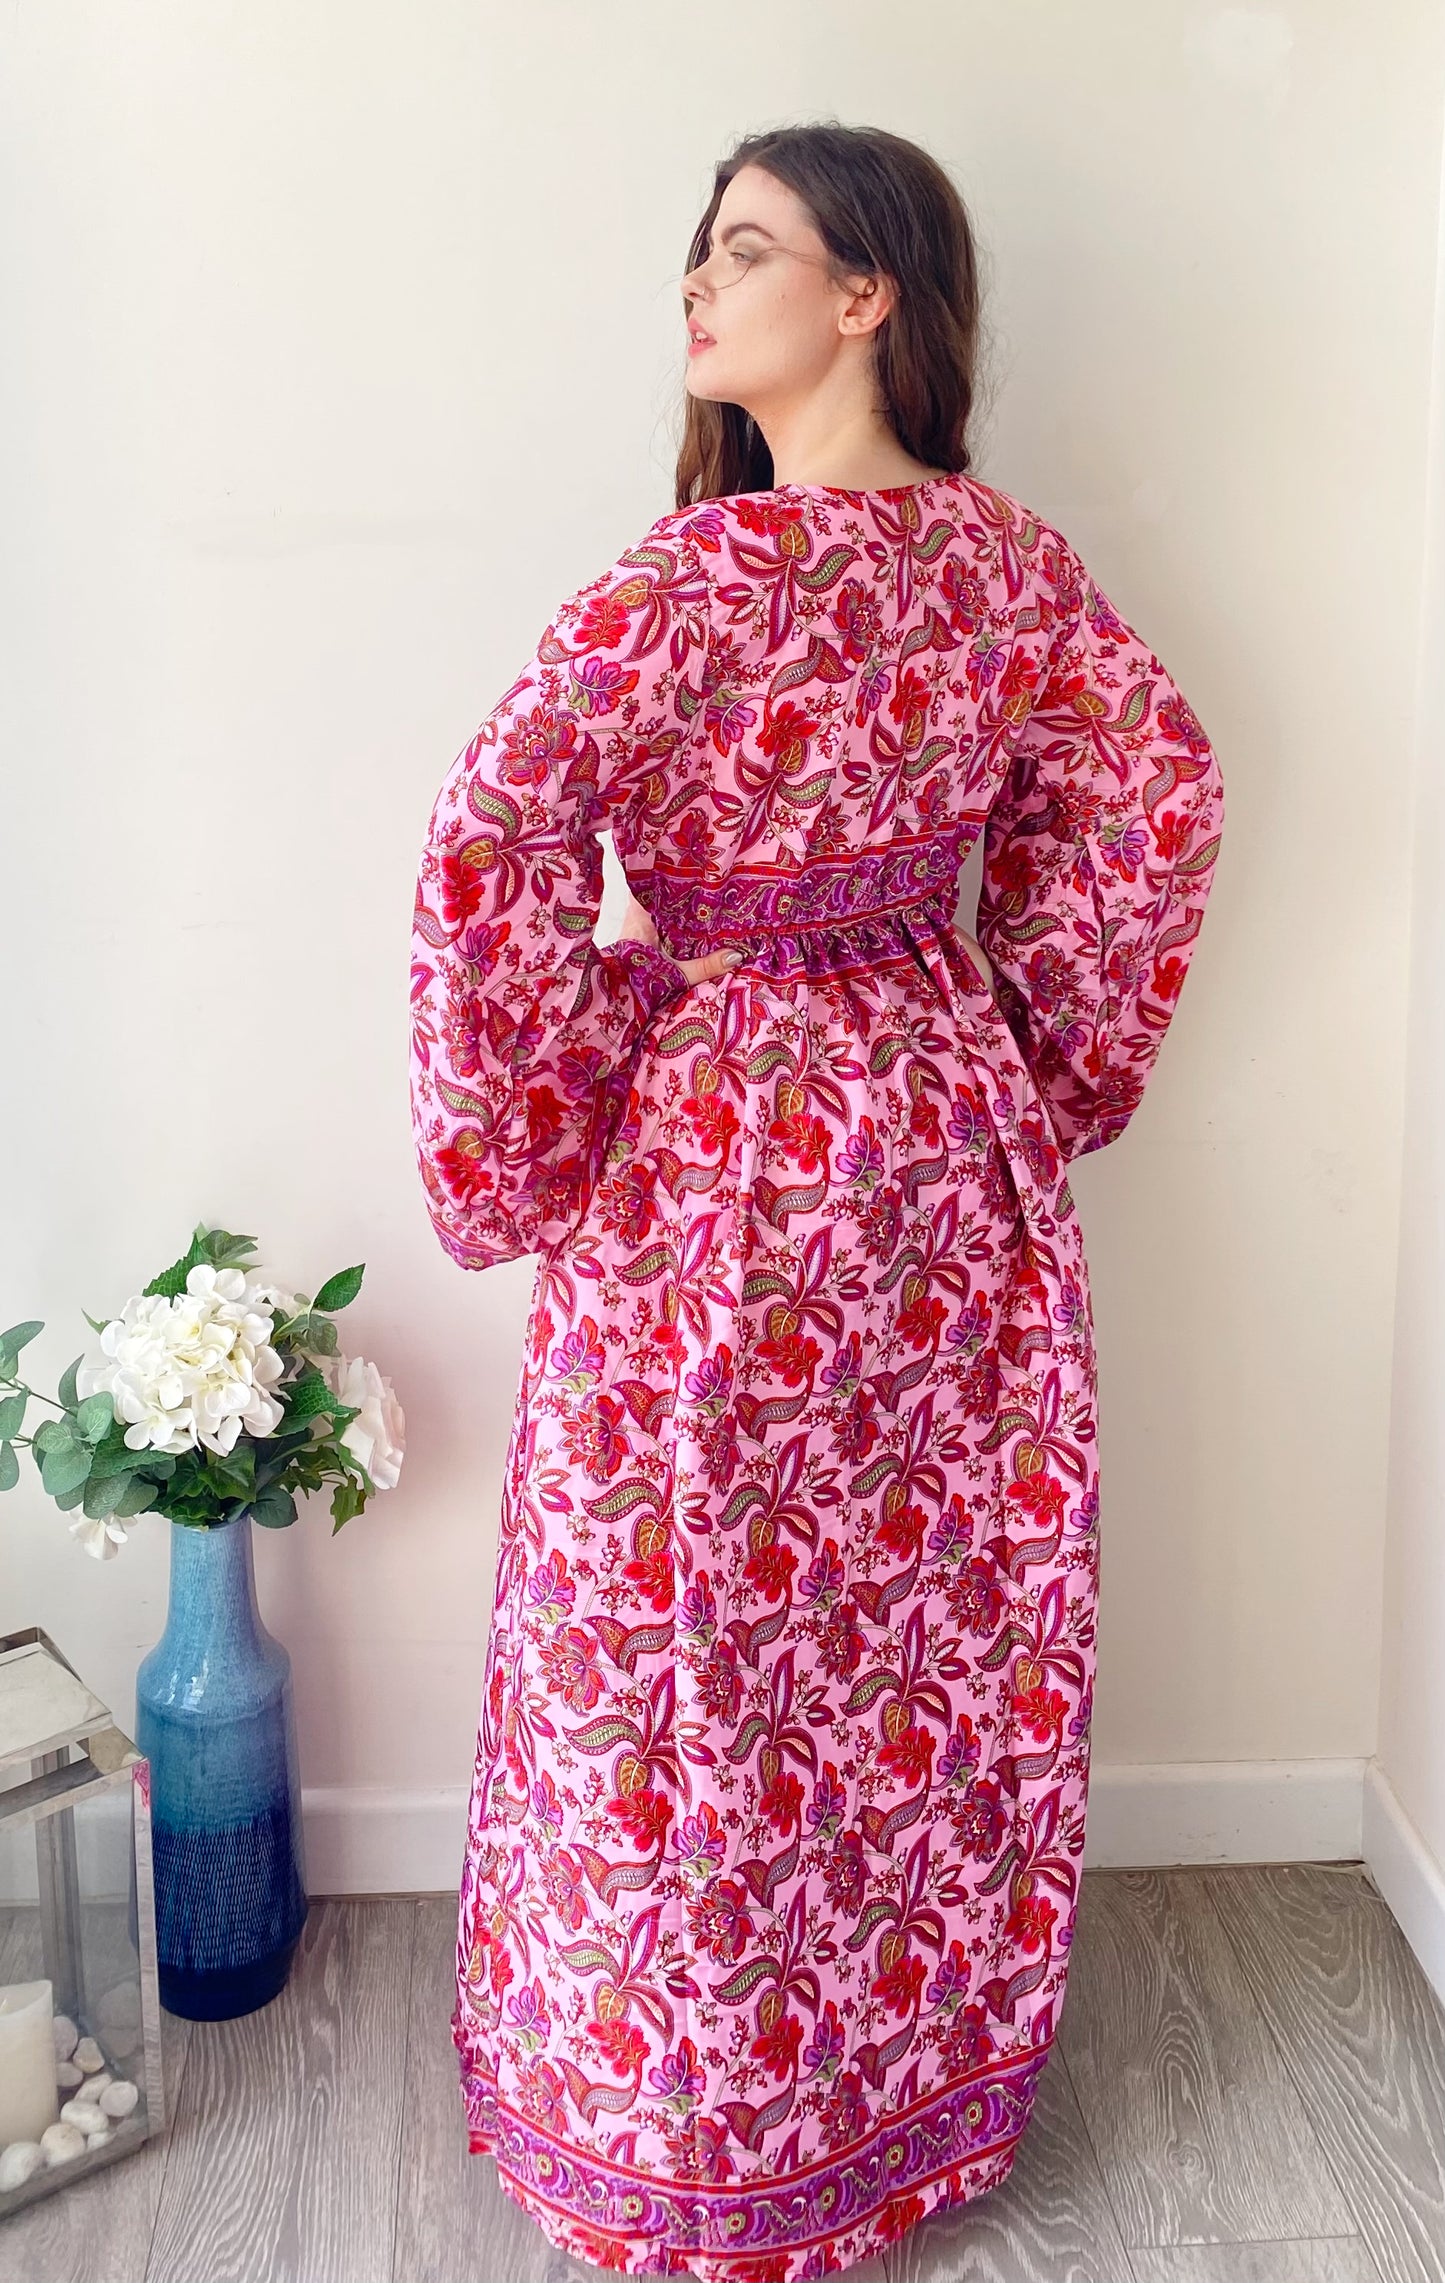 Nova pink floral-print silk maxi dress free size UK8-16